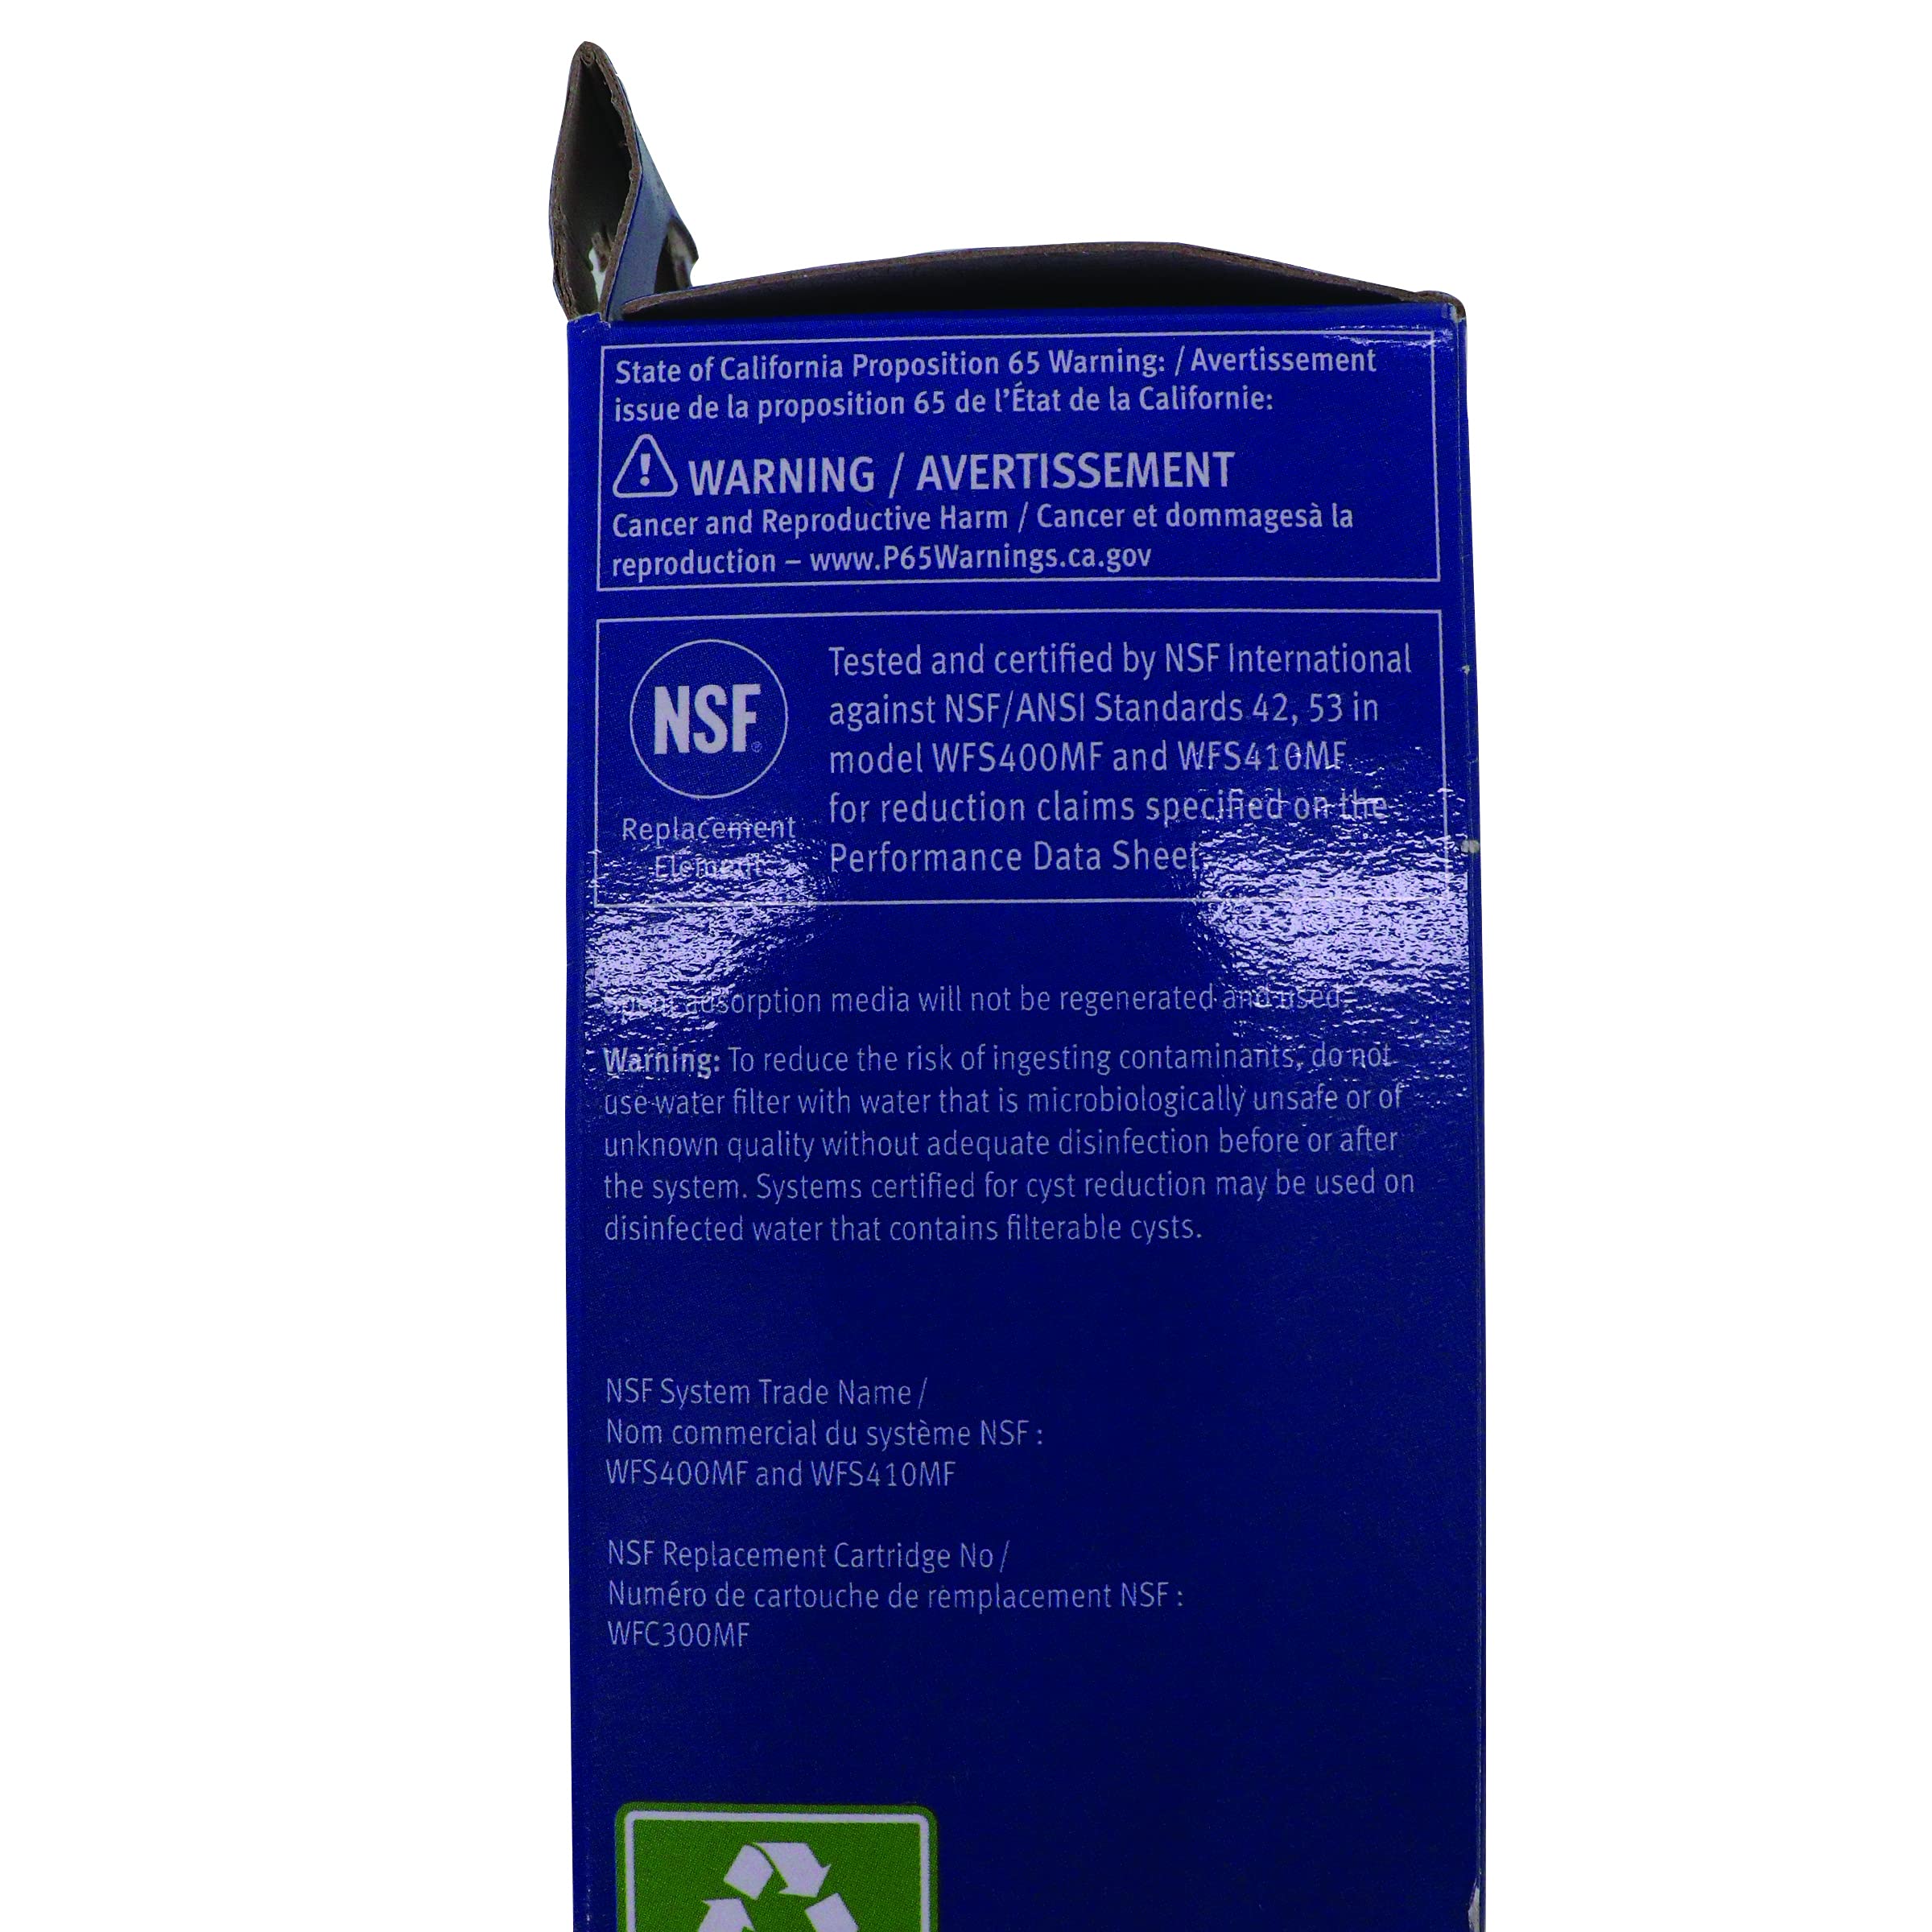 11034152 UltraClarity Water Filter Cartridge